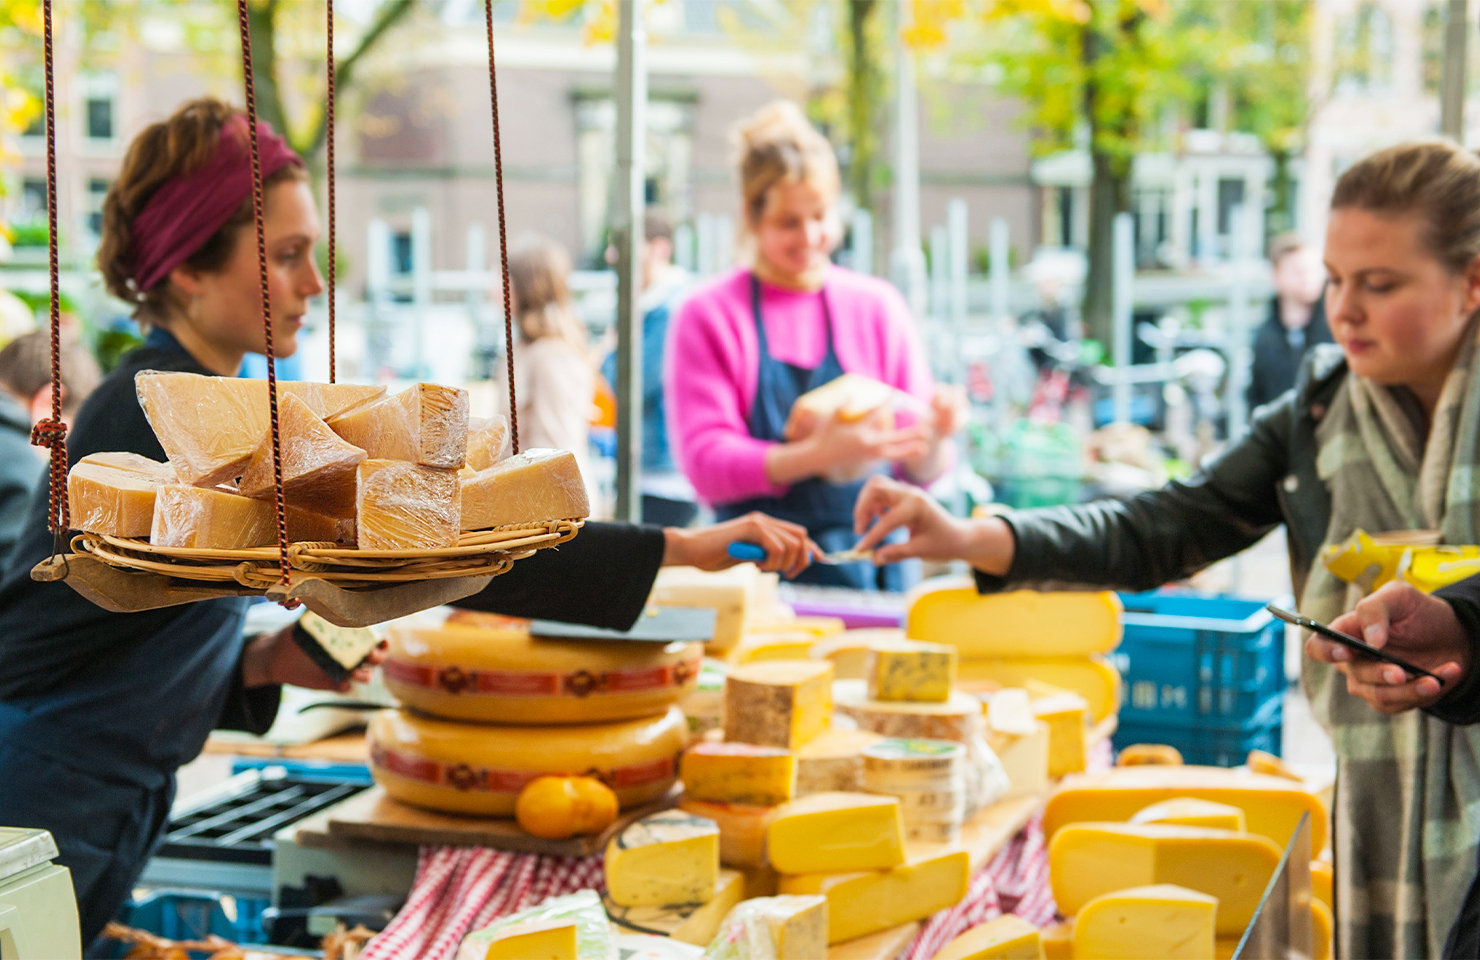 Cheese stand on the Noordermarkt in Amsterdam